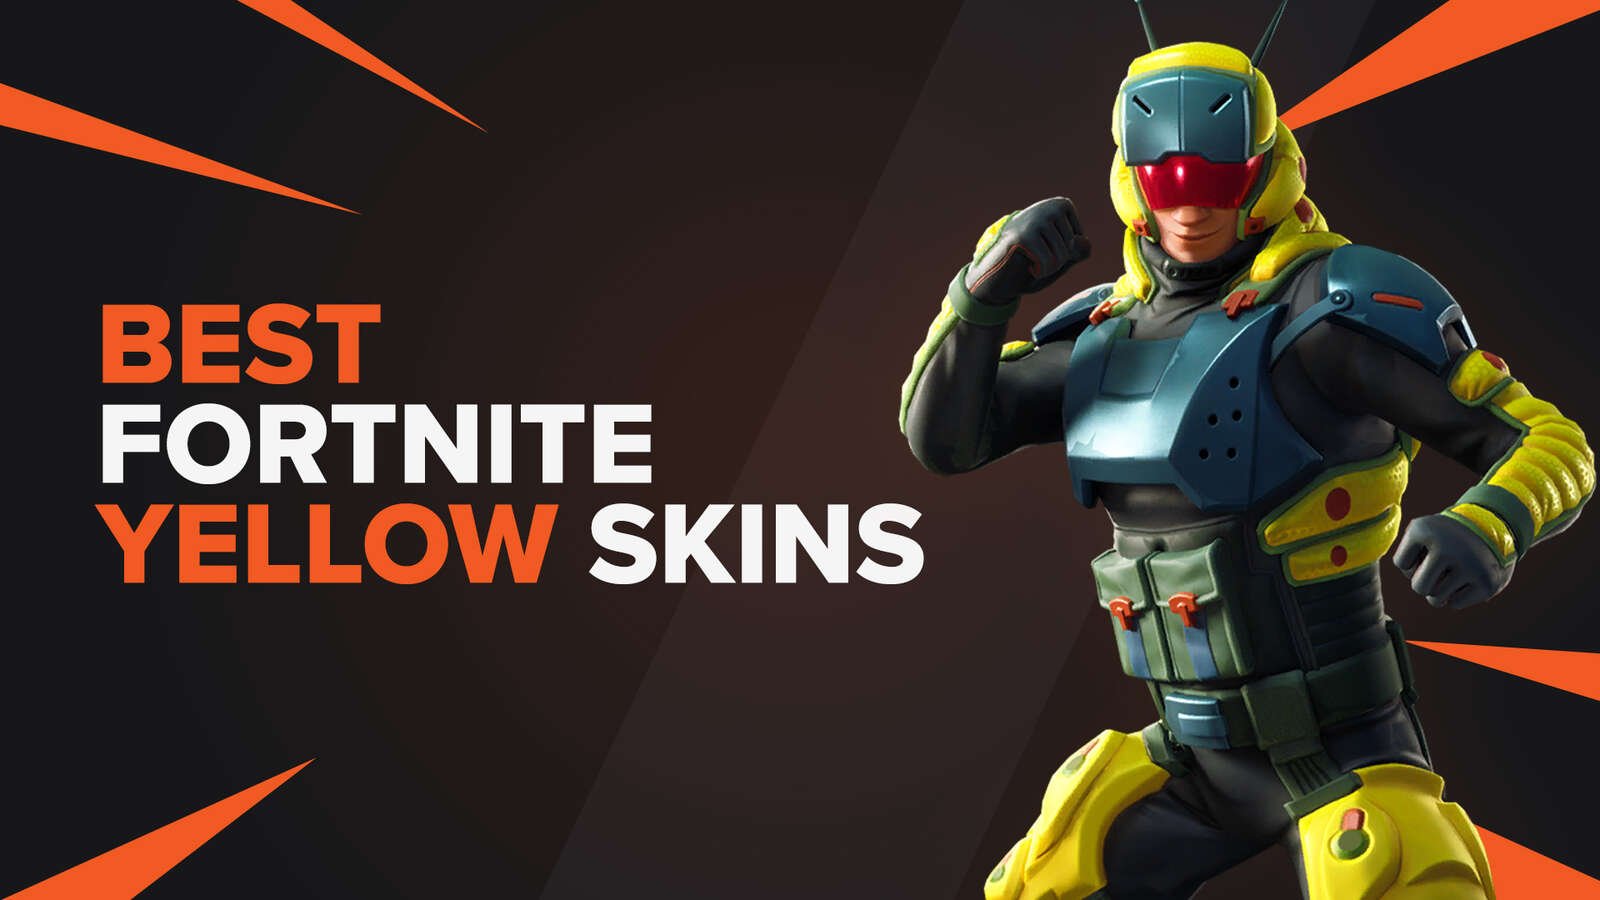 Fortnite’s Best Yellow Skins